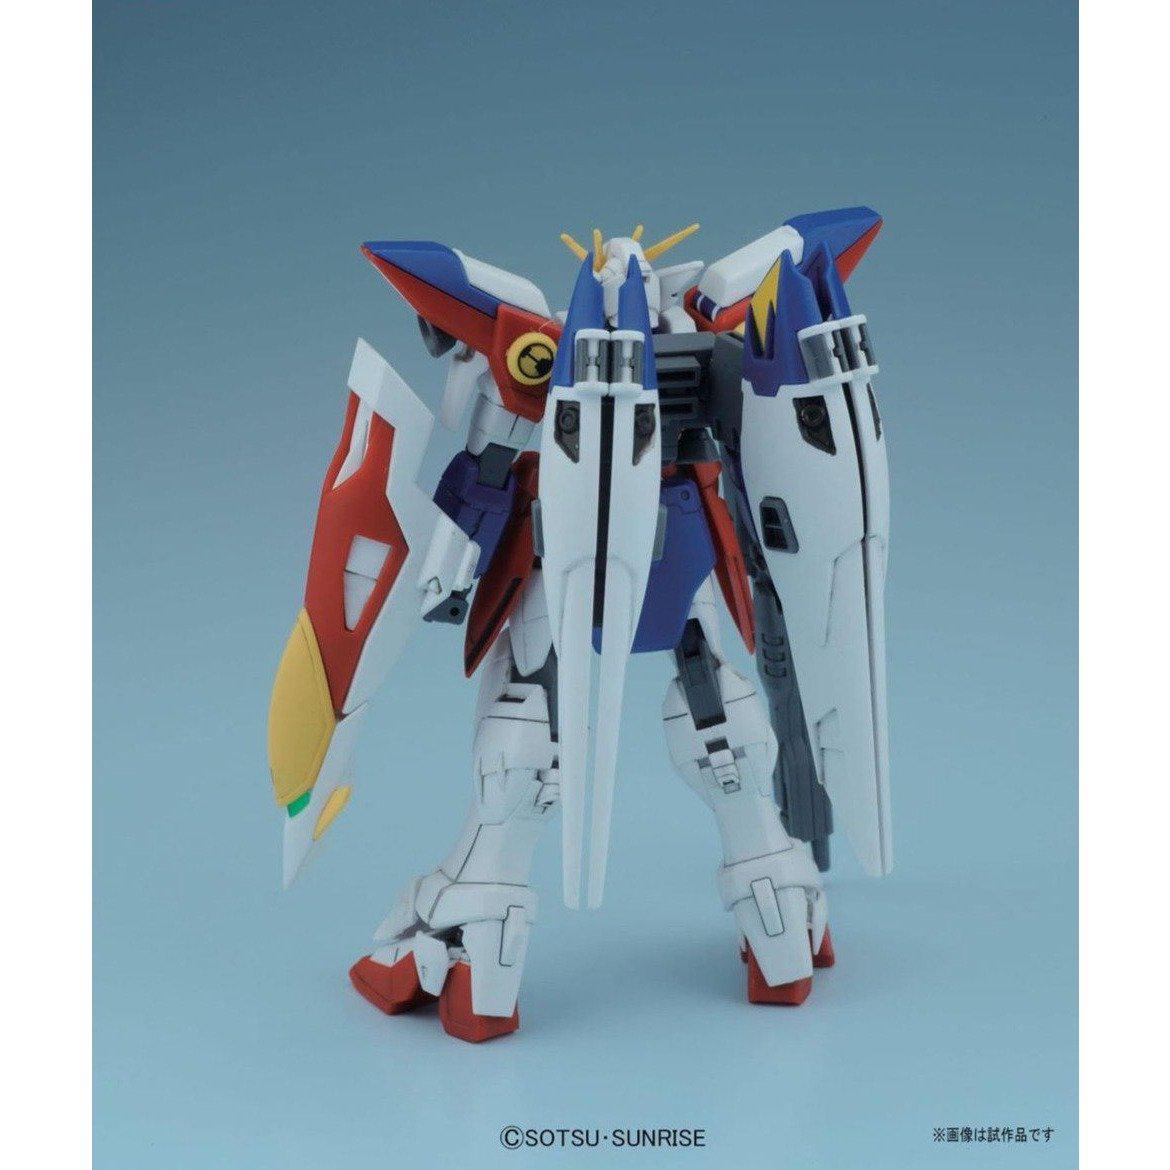 Gunpla HGAC 1/144 XXXG-00W0 Wing Gundam Zero-Bandai-Ace Cards &amp; Collectibles